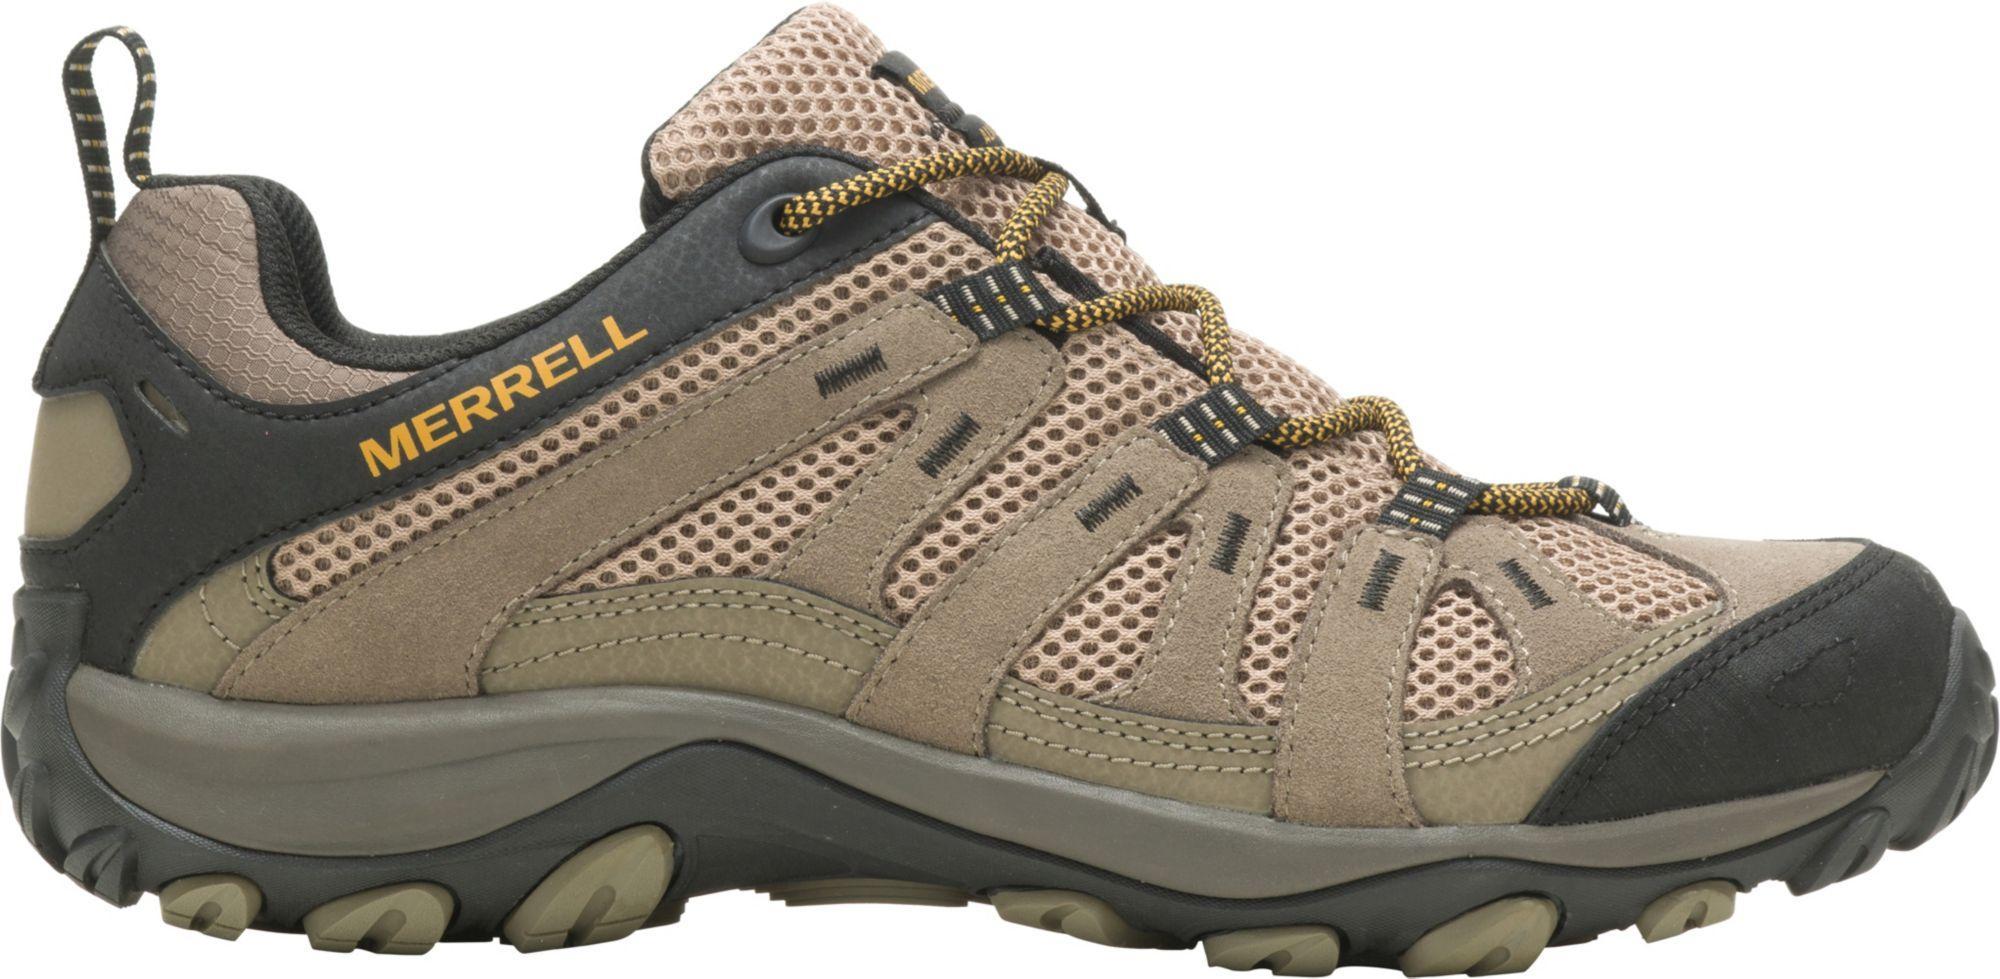 Merrell Alverstone 2 (Pecan) Men's Shoes Product Image